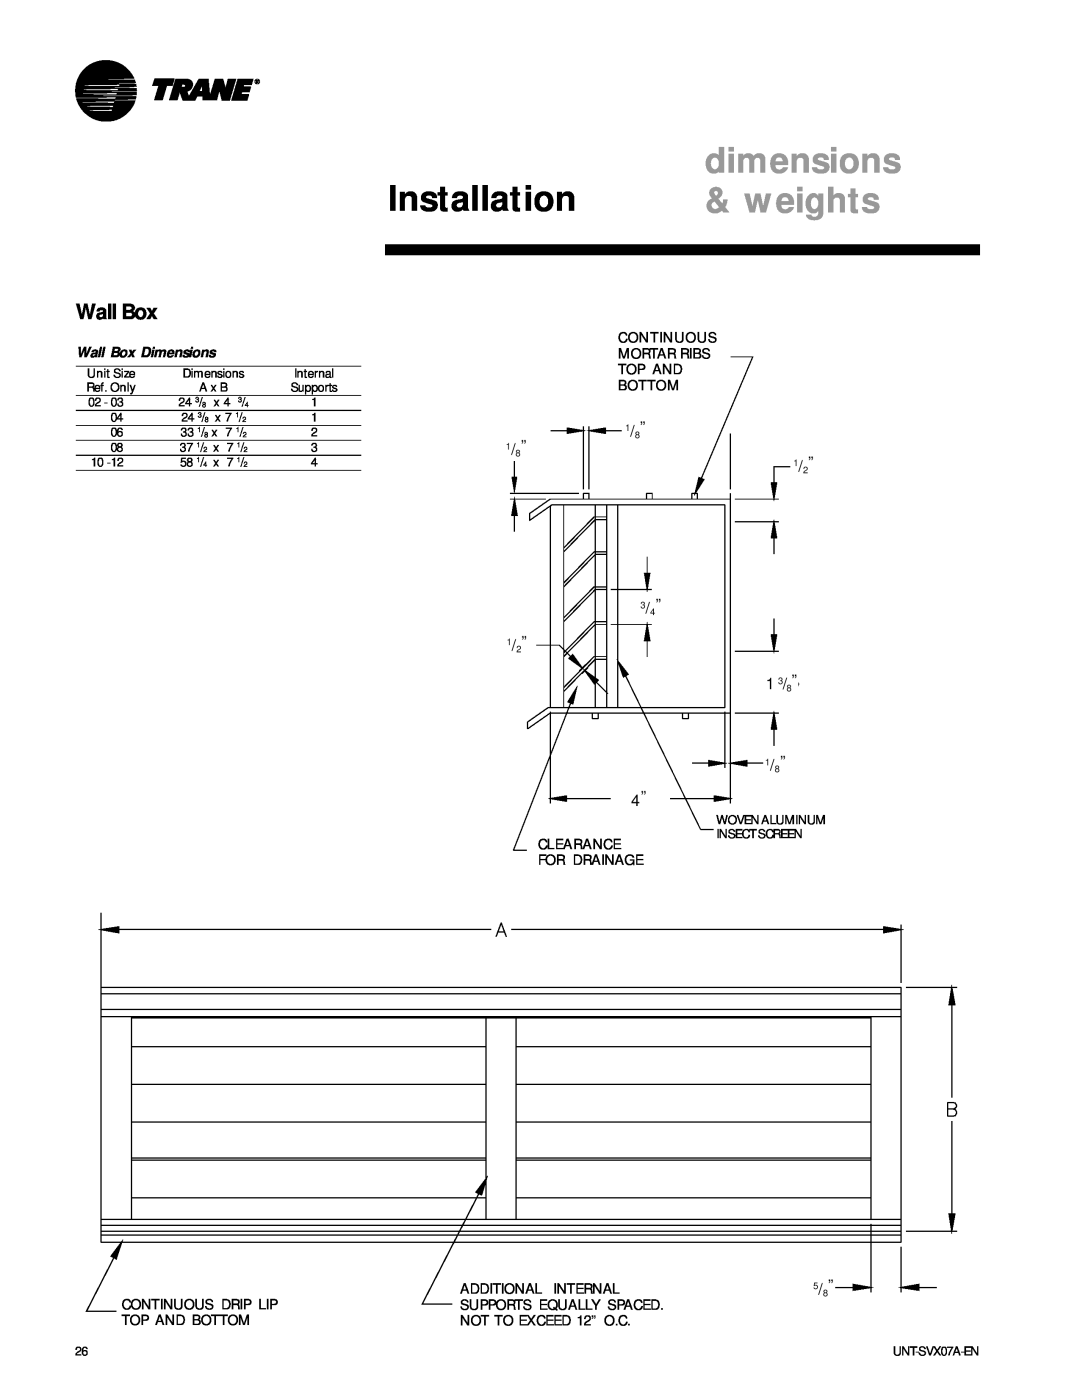 Trane UNT-SVX07A-EN manual Installation, dimensions, weights, Wall Box Dimensions 